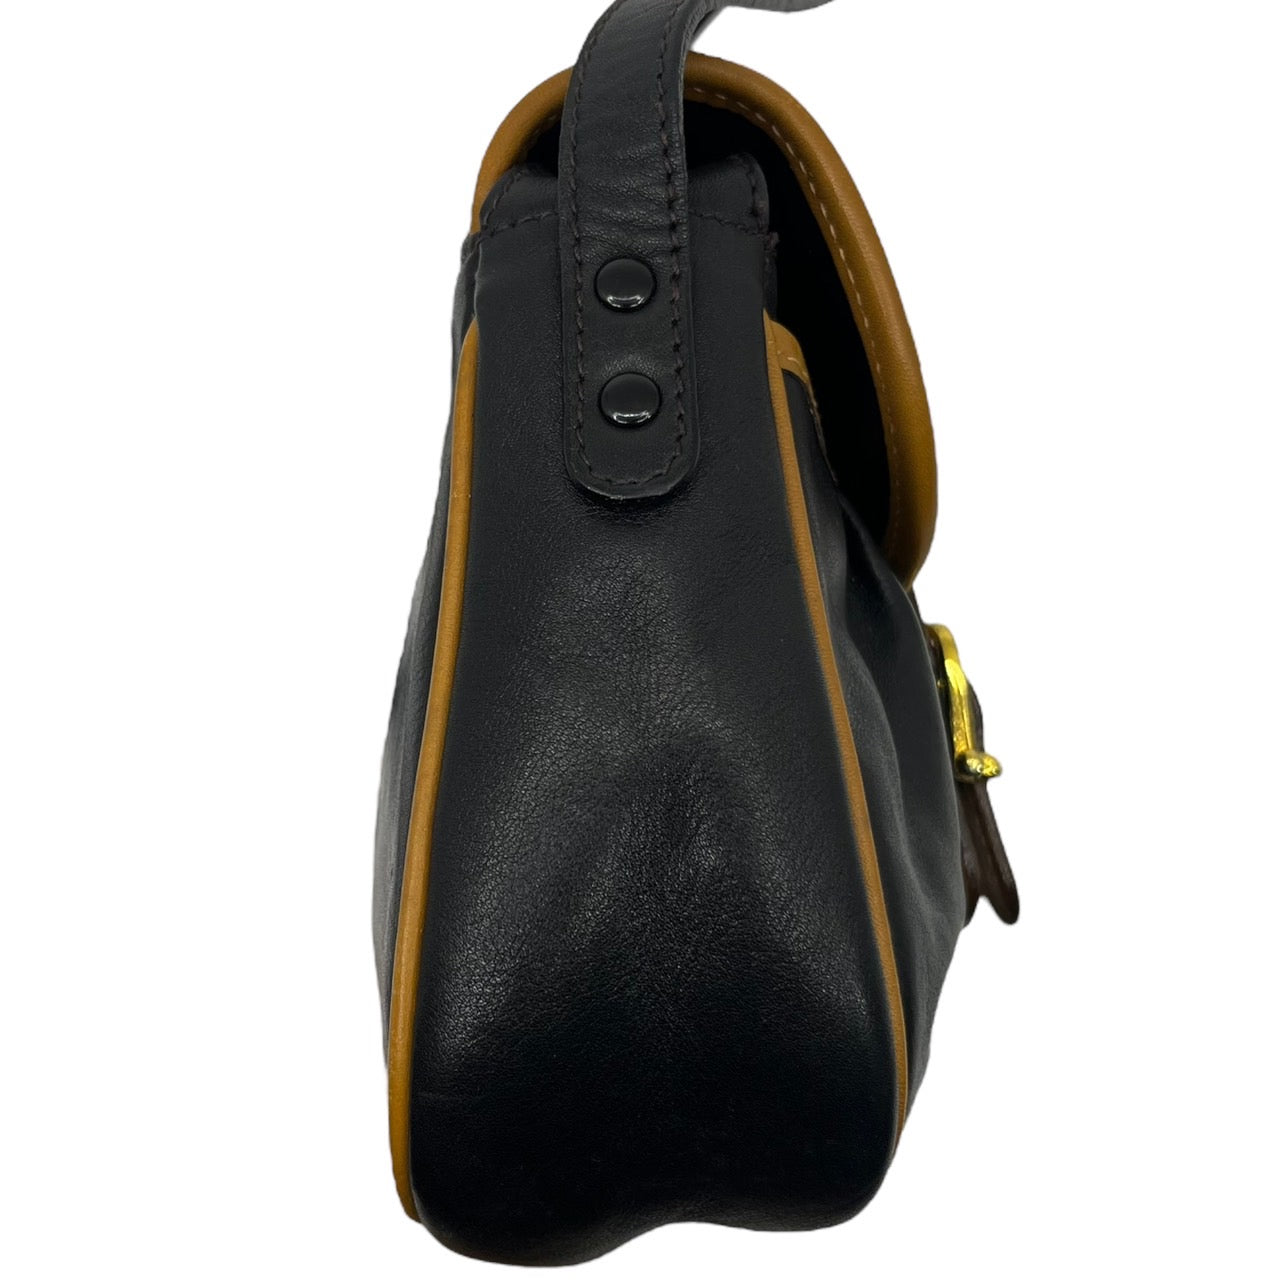 CELINE(セリーヌ) triomphe mini leather shoulder bag/トリオンフミニ 